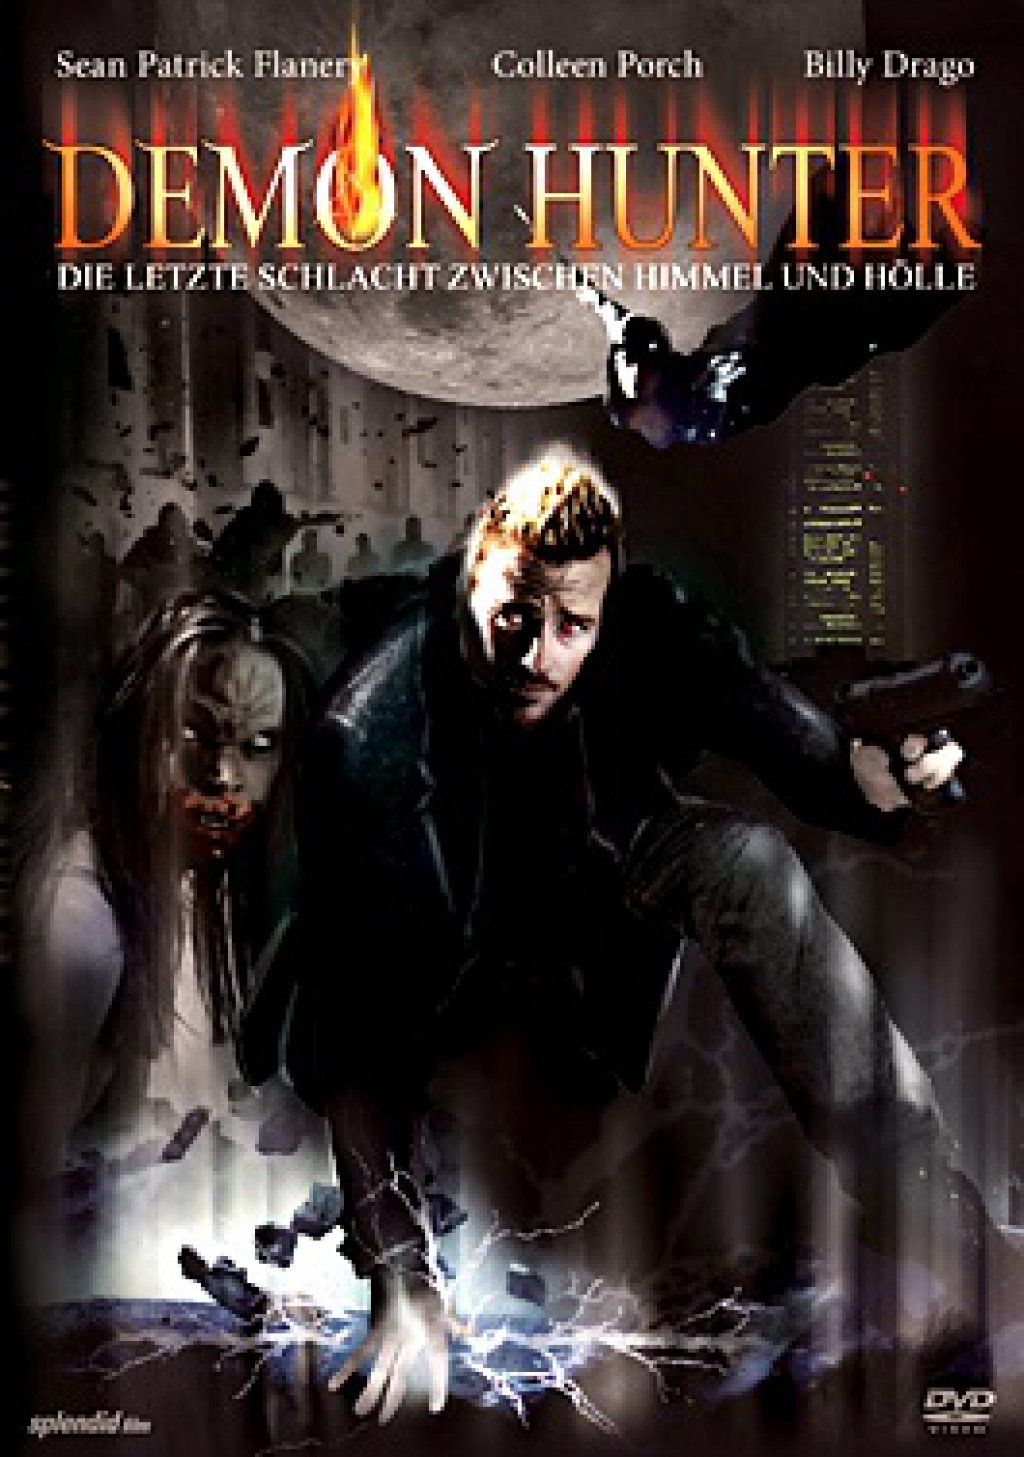 Demon Hunter (DVD)